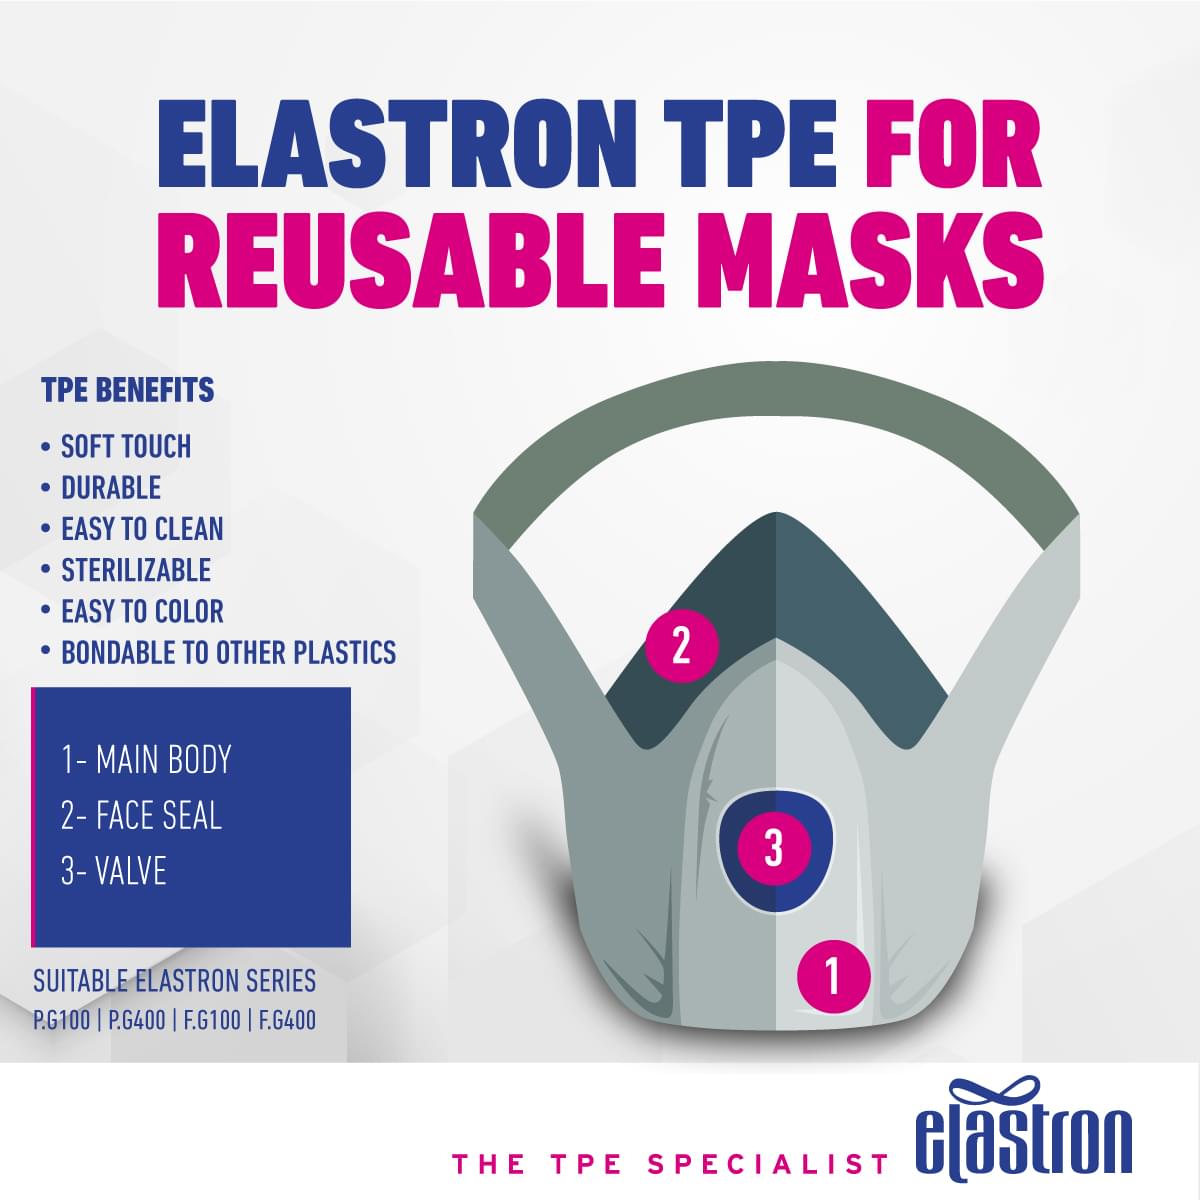 Elastron TPE for Reusable Masks – Press Release